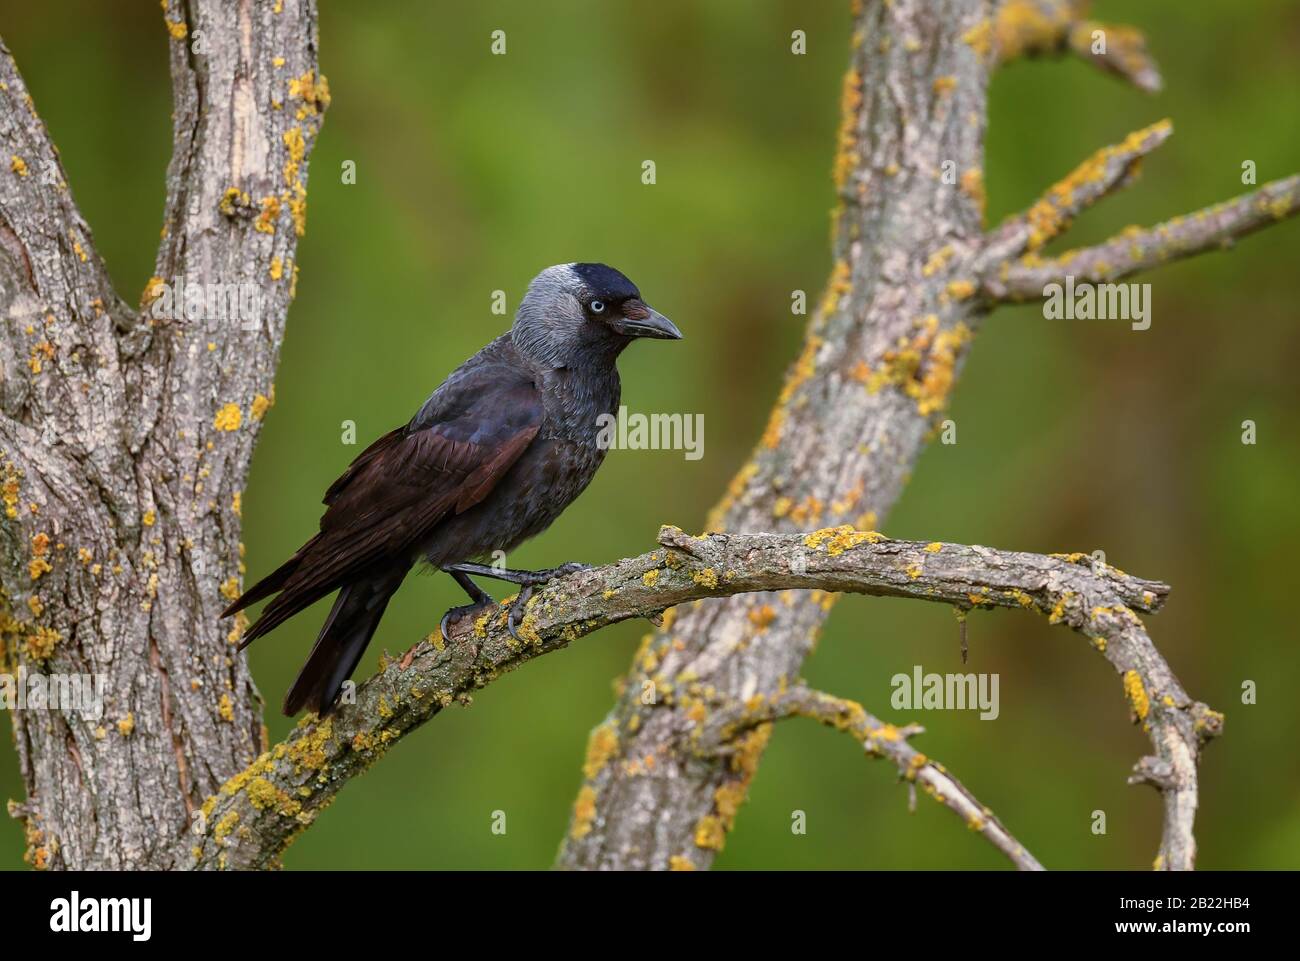 Eurasian Jackdaw - Corvus monedula, beautiful perching bird from Euroasian forests and woodlands, Hortobagy, Hungary. Stock Photo